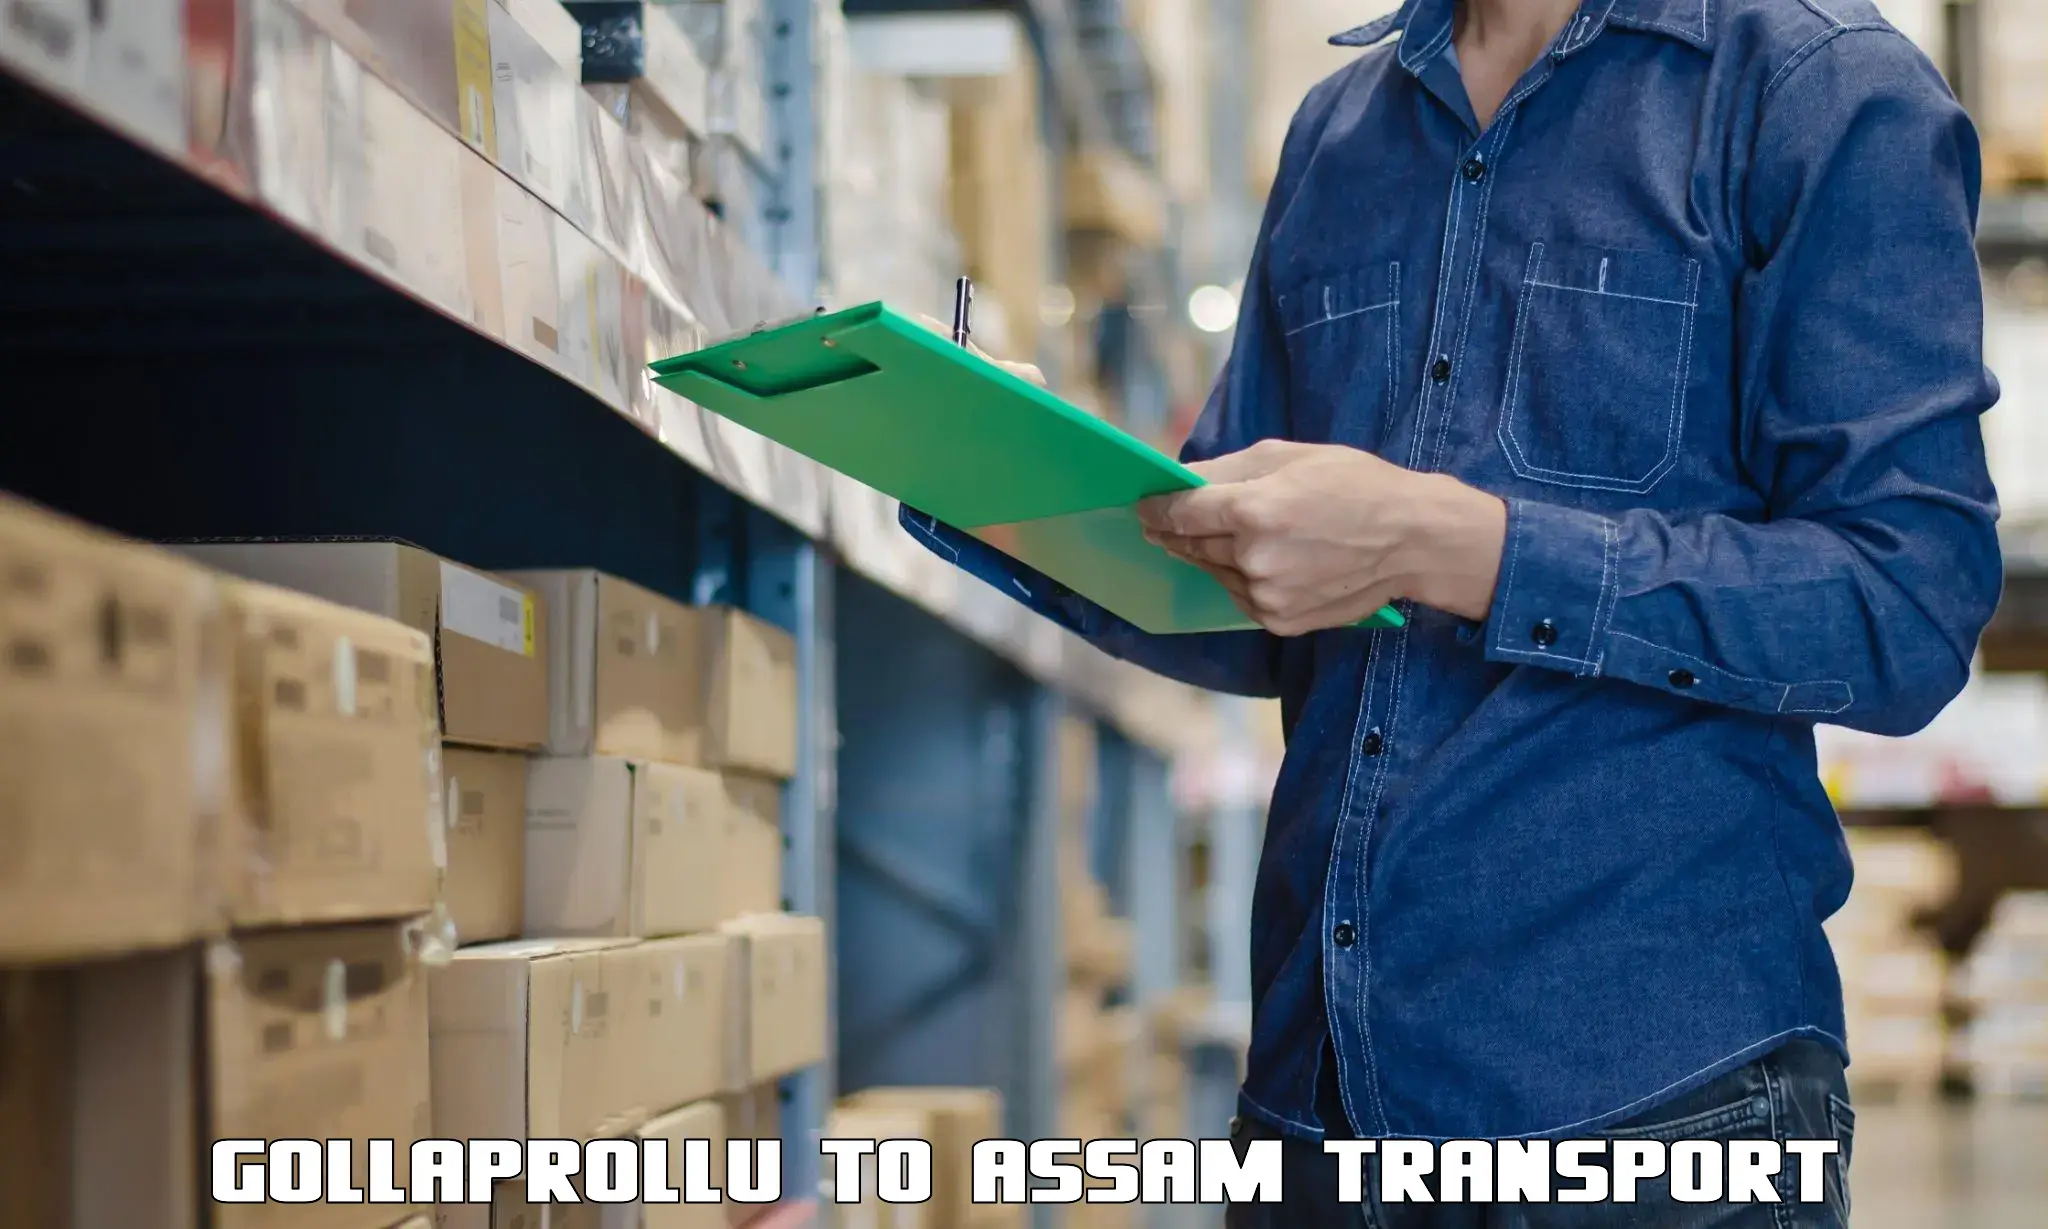 Cargo transport services Gollaprollu to Assam